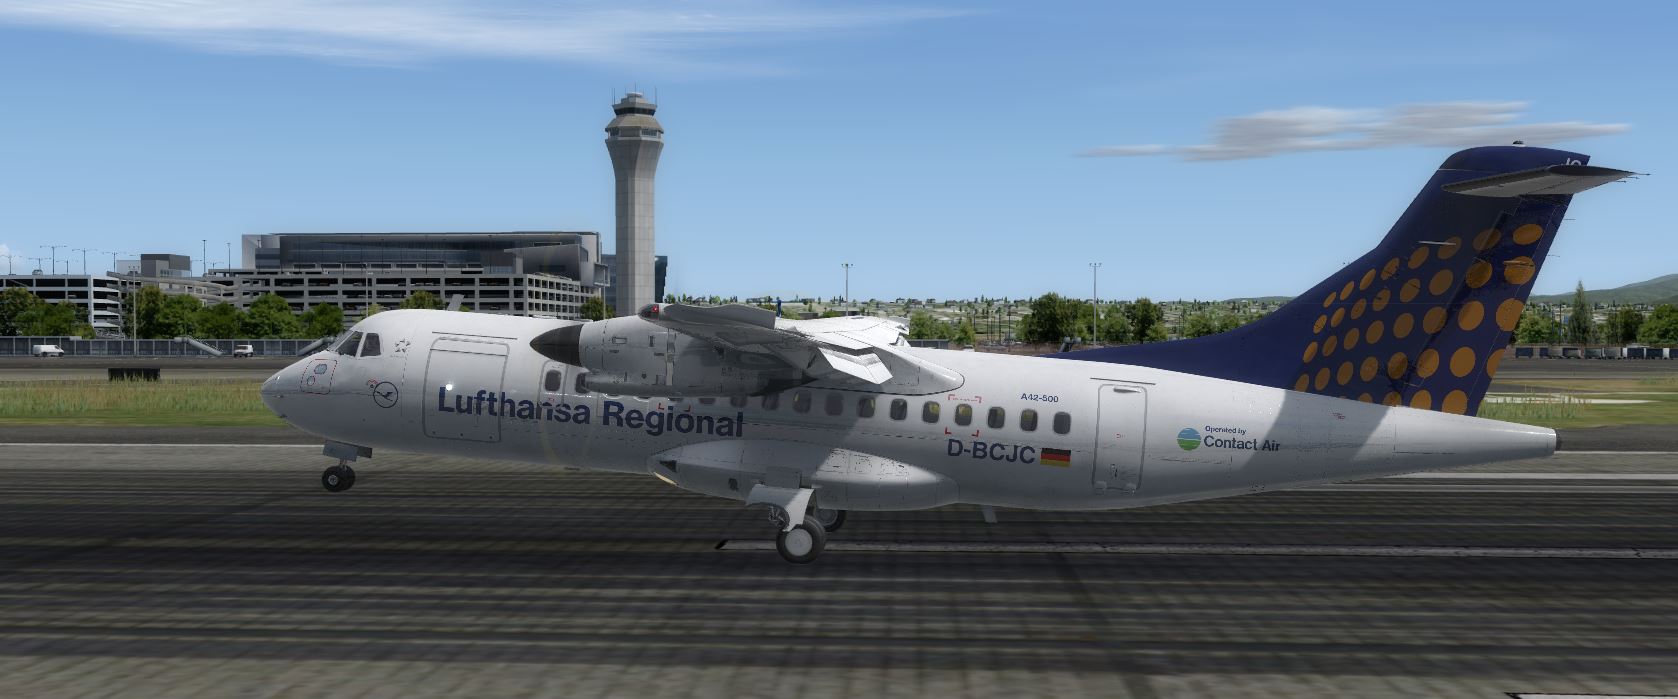 ATR42-500 Lufthansa-8602 